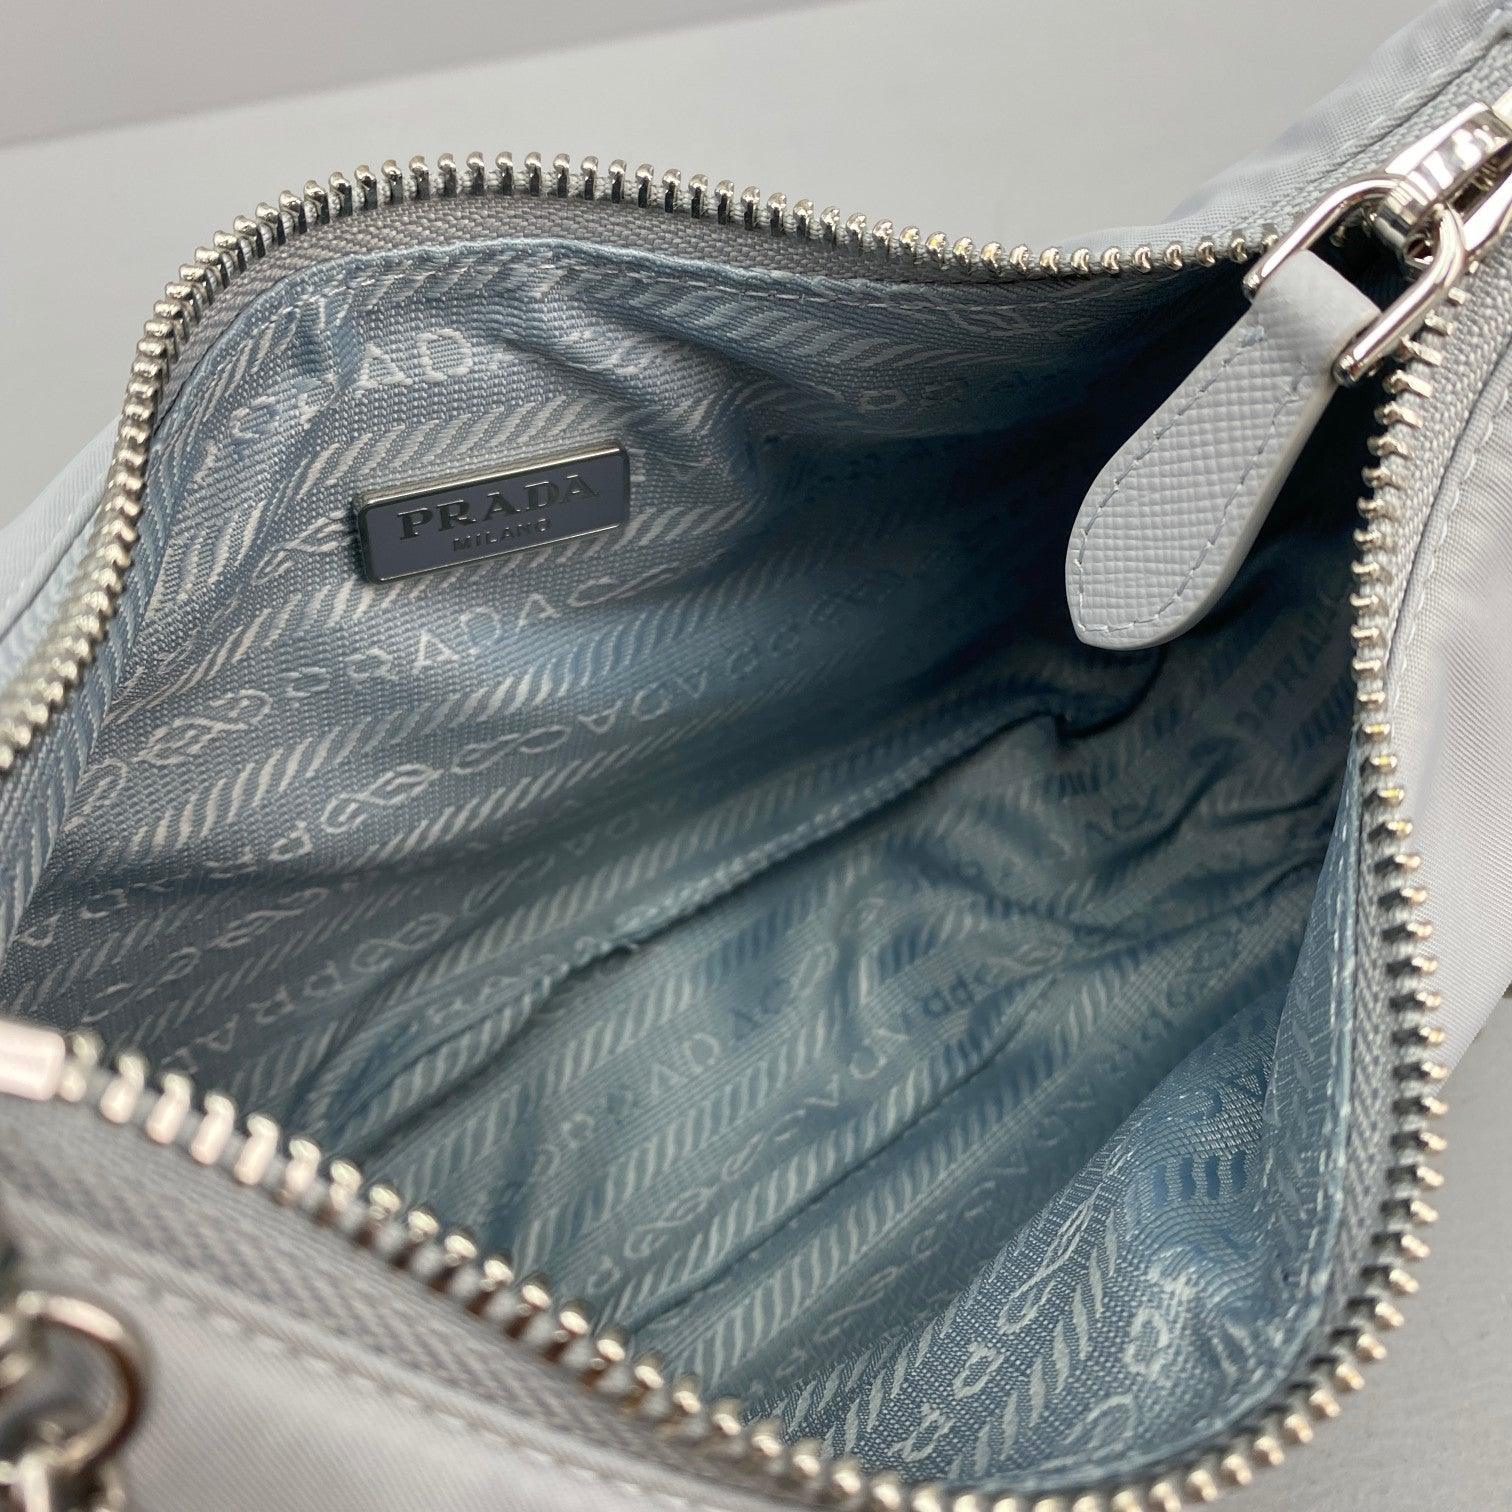 Prada Re-Edition 2005 Re-Nylon Bag Cornflower Blue in Re-Nylon